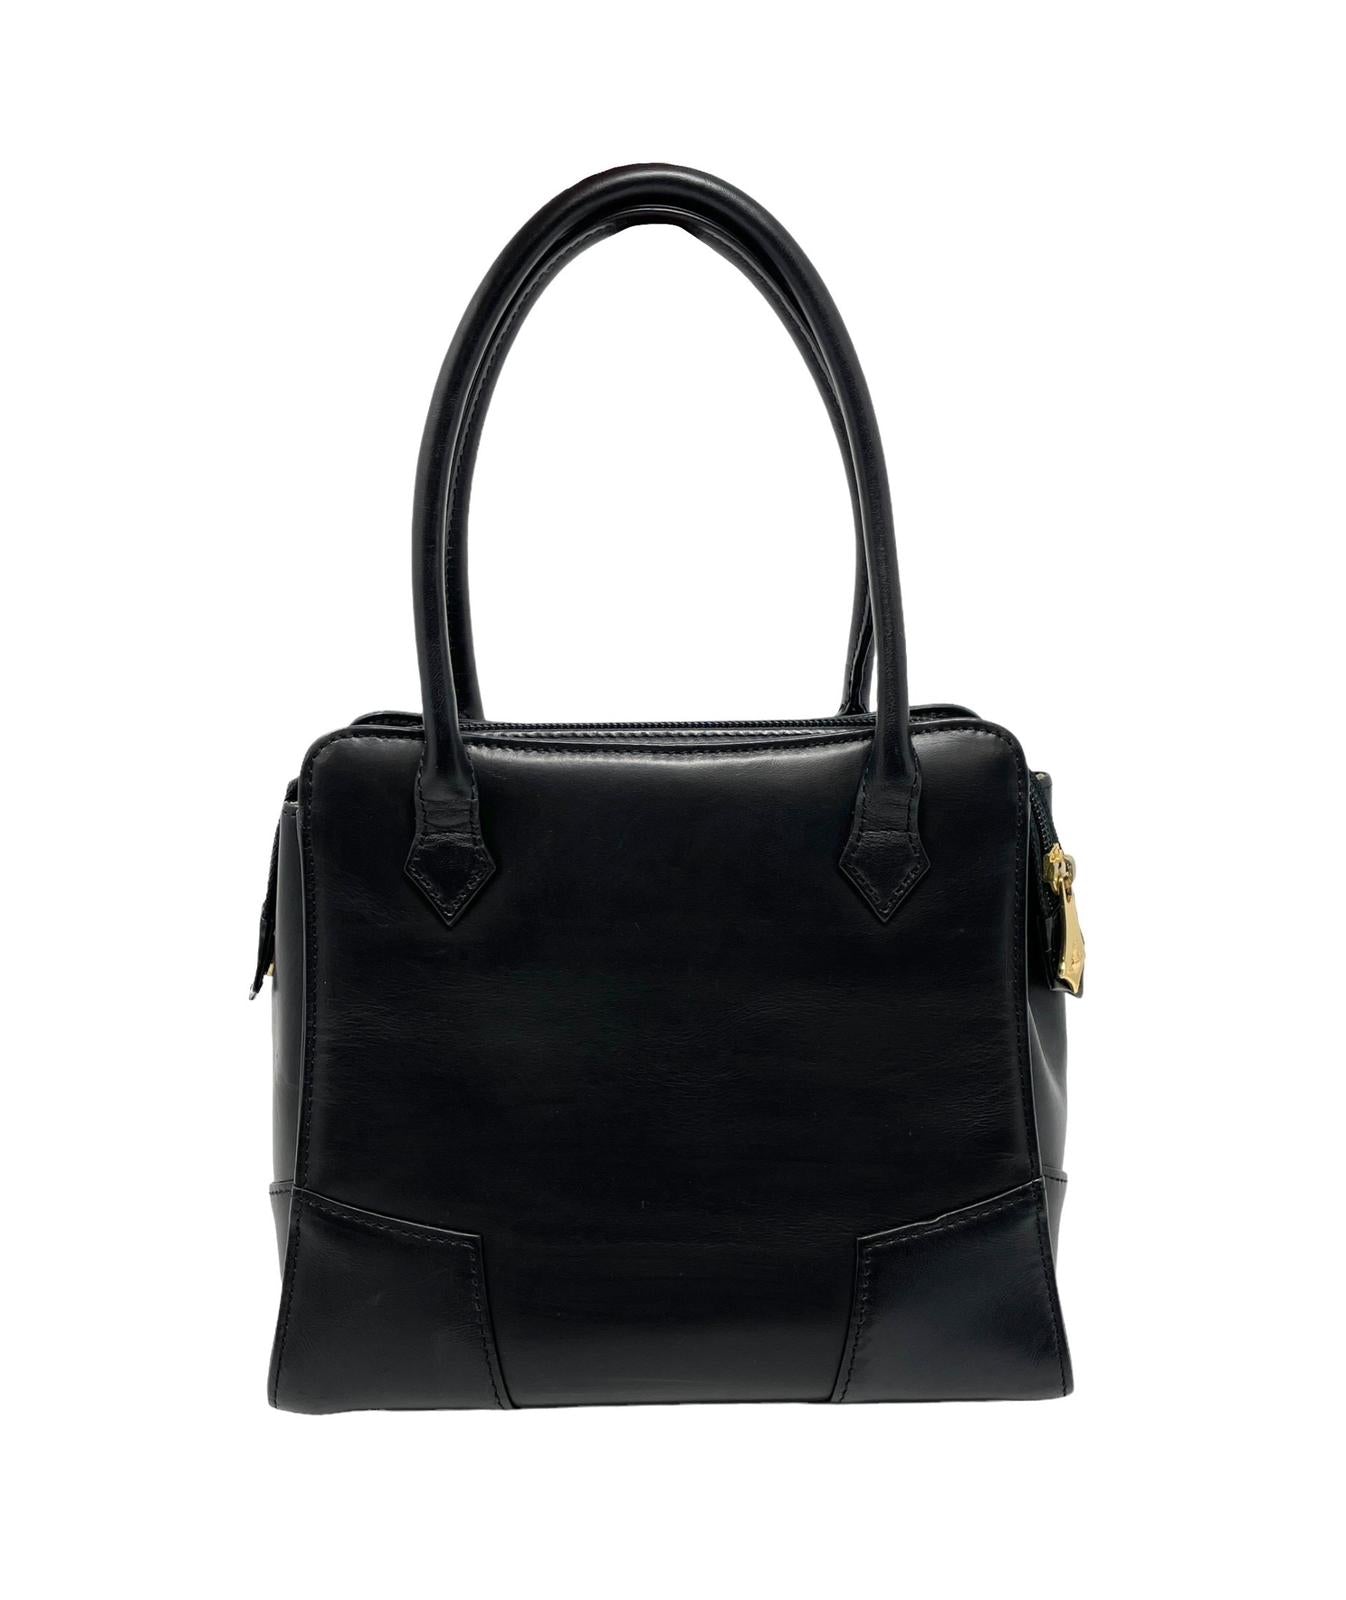 Vivienne Westwood Leather Tote Bags